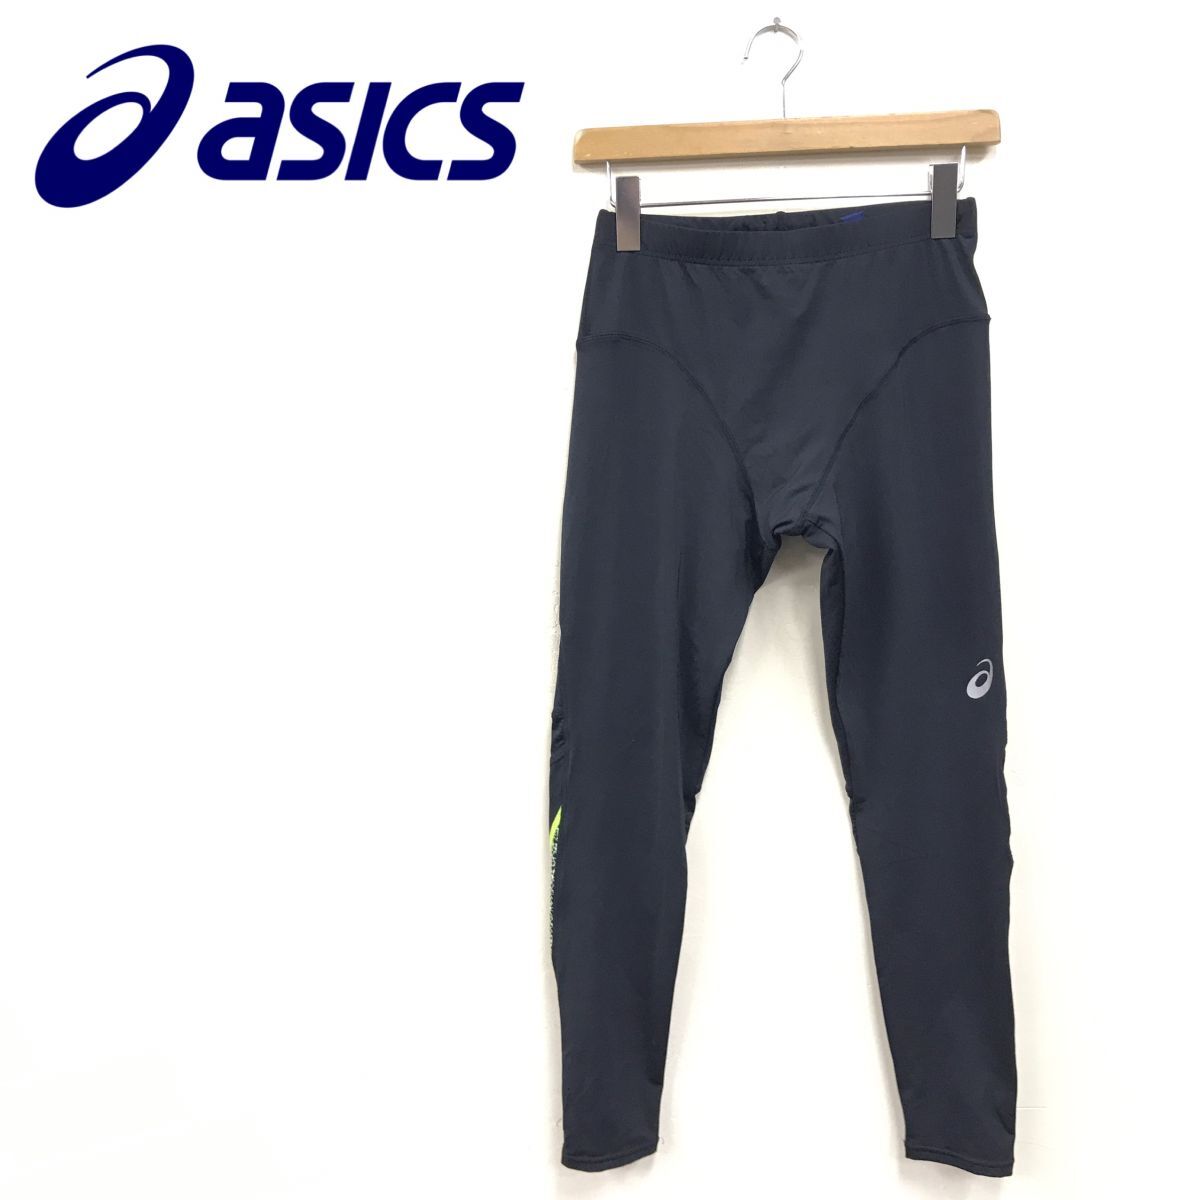 A498-R*asics Asics inner leggings * size XL 83~89 men's gentleman sport wear black bottoms neon yellow 